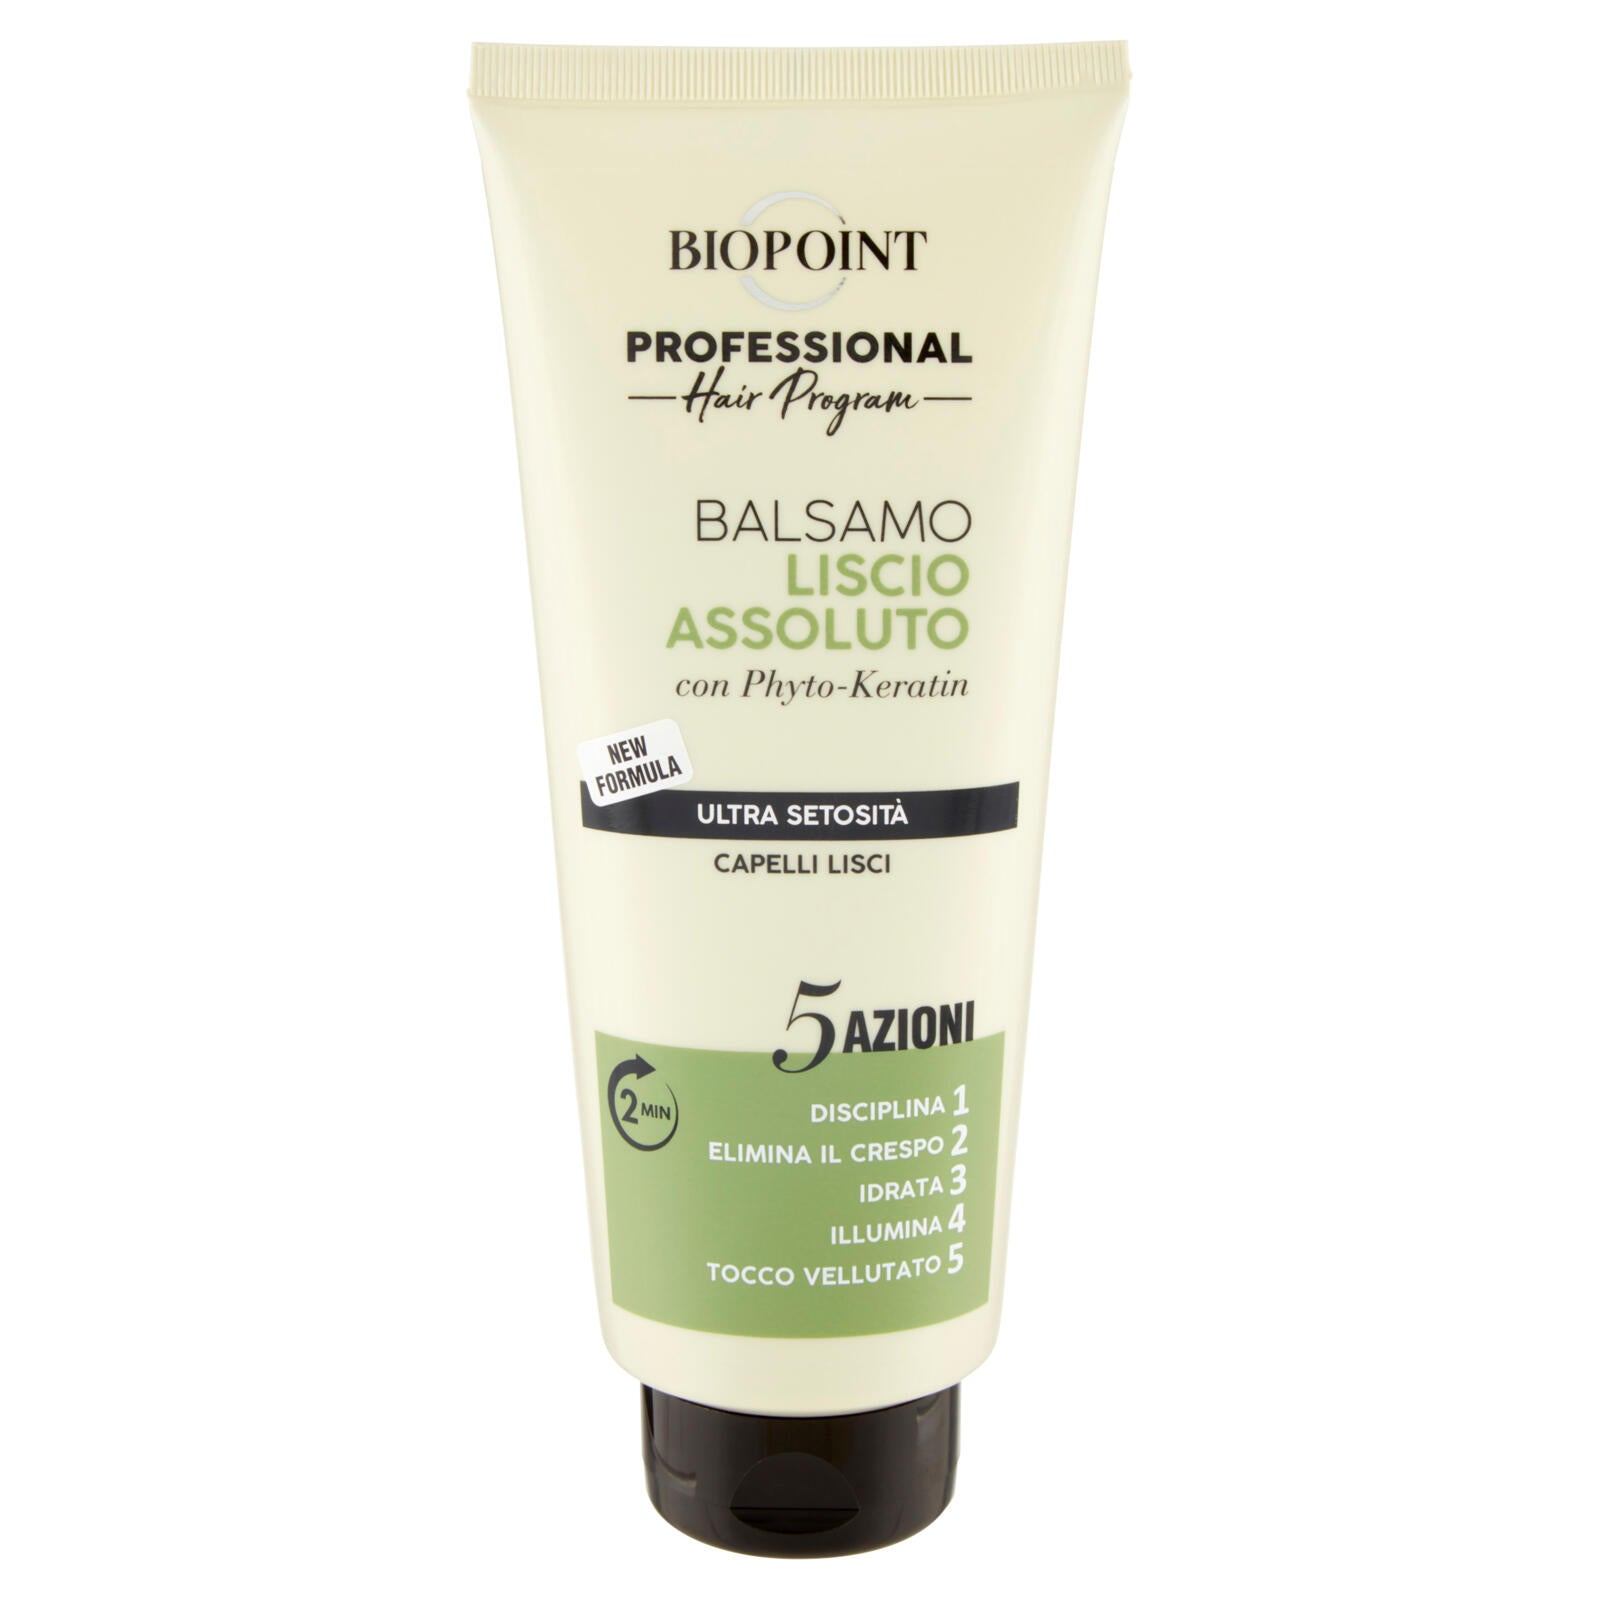 Biopoint Professional Hair Program Balsamo Liscio Assoluto 350 ml